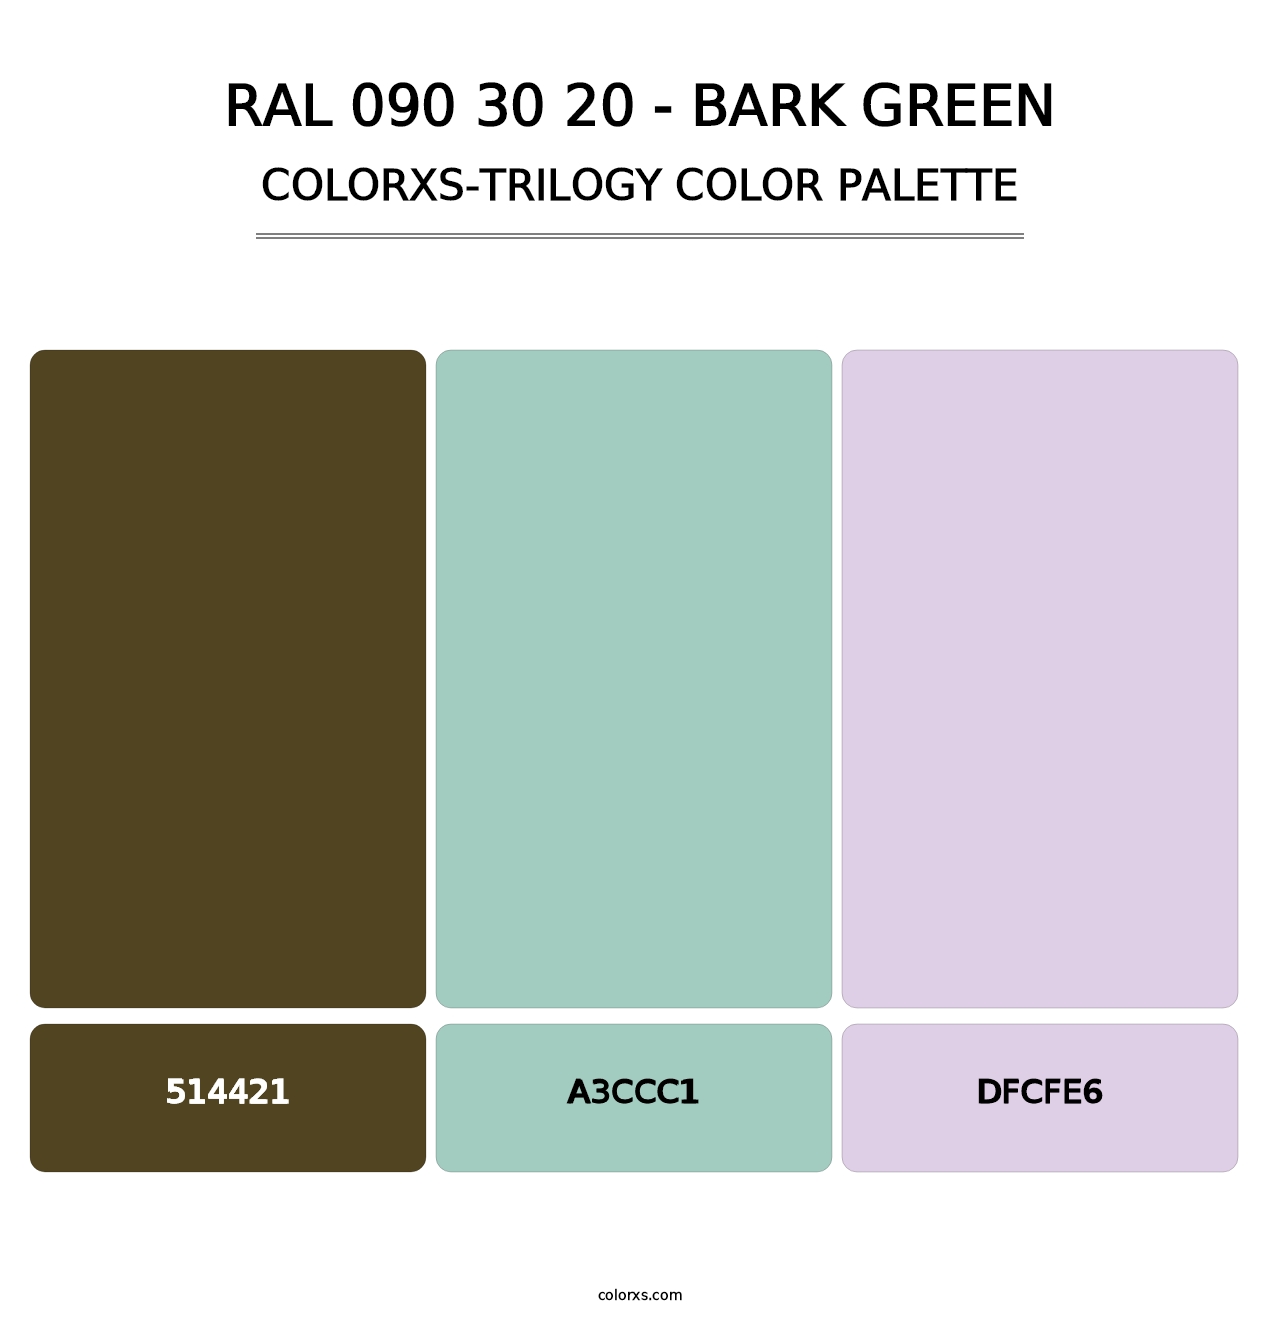 RAL 090 30 20 - Bark Green - Colorxs Trilogy Palette